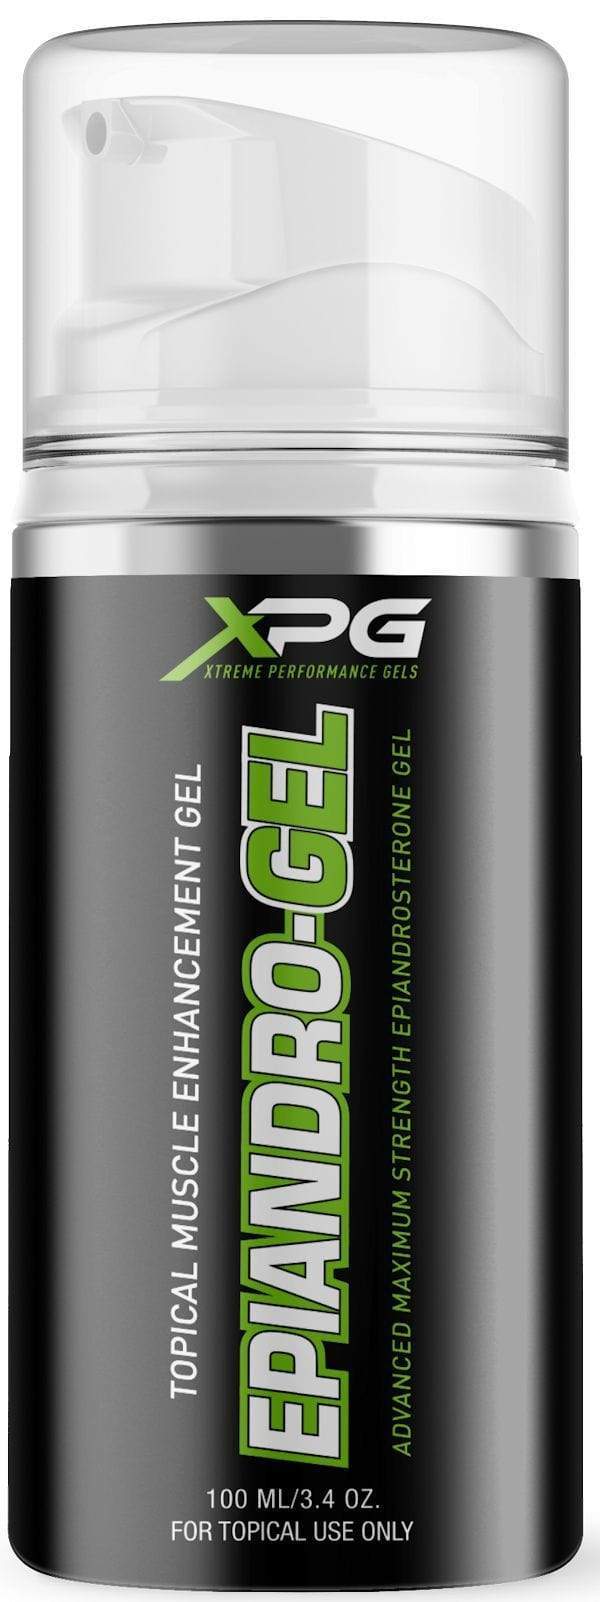 XPG muscle Cream Xtreme Performance Gels EpiAndro Gels 3.4 oz